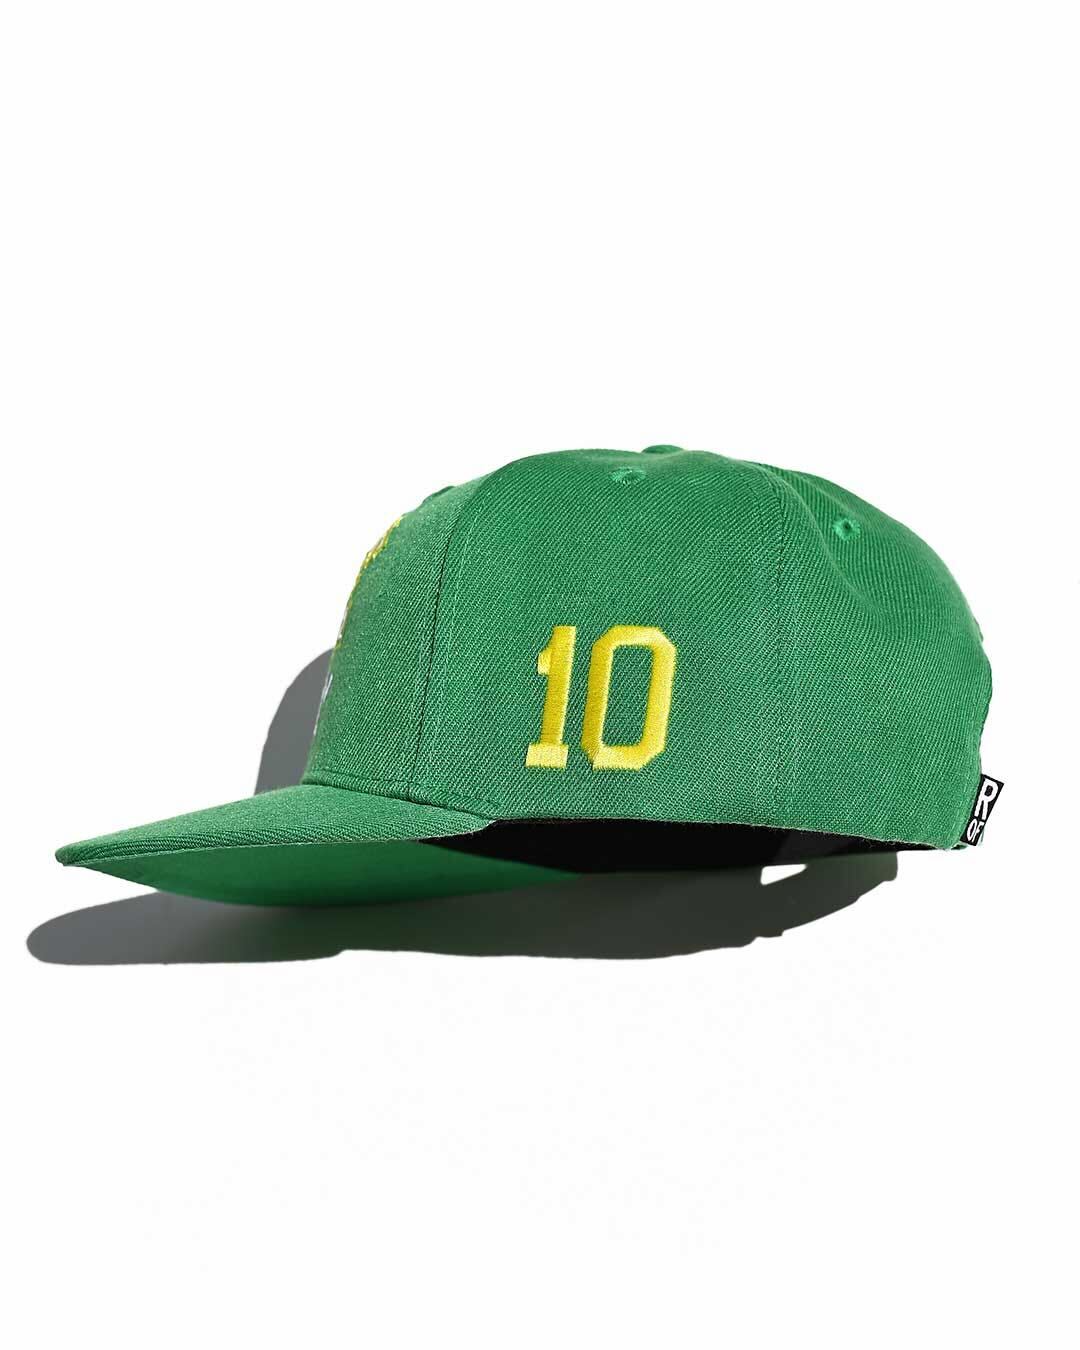 Pelé 1962 Brasil Green Snapback Hat - Roots of Fight Canada